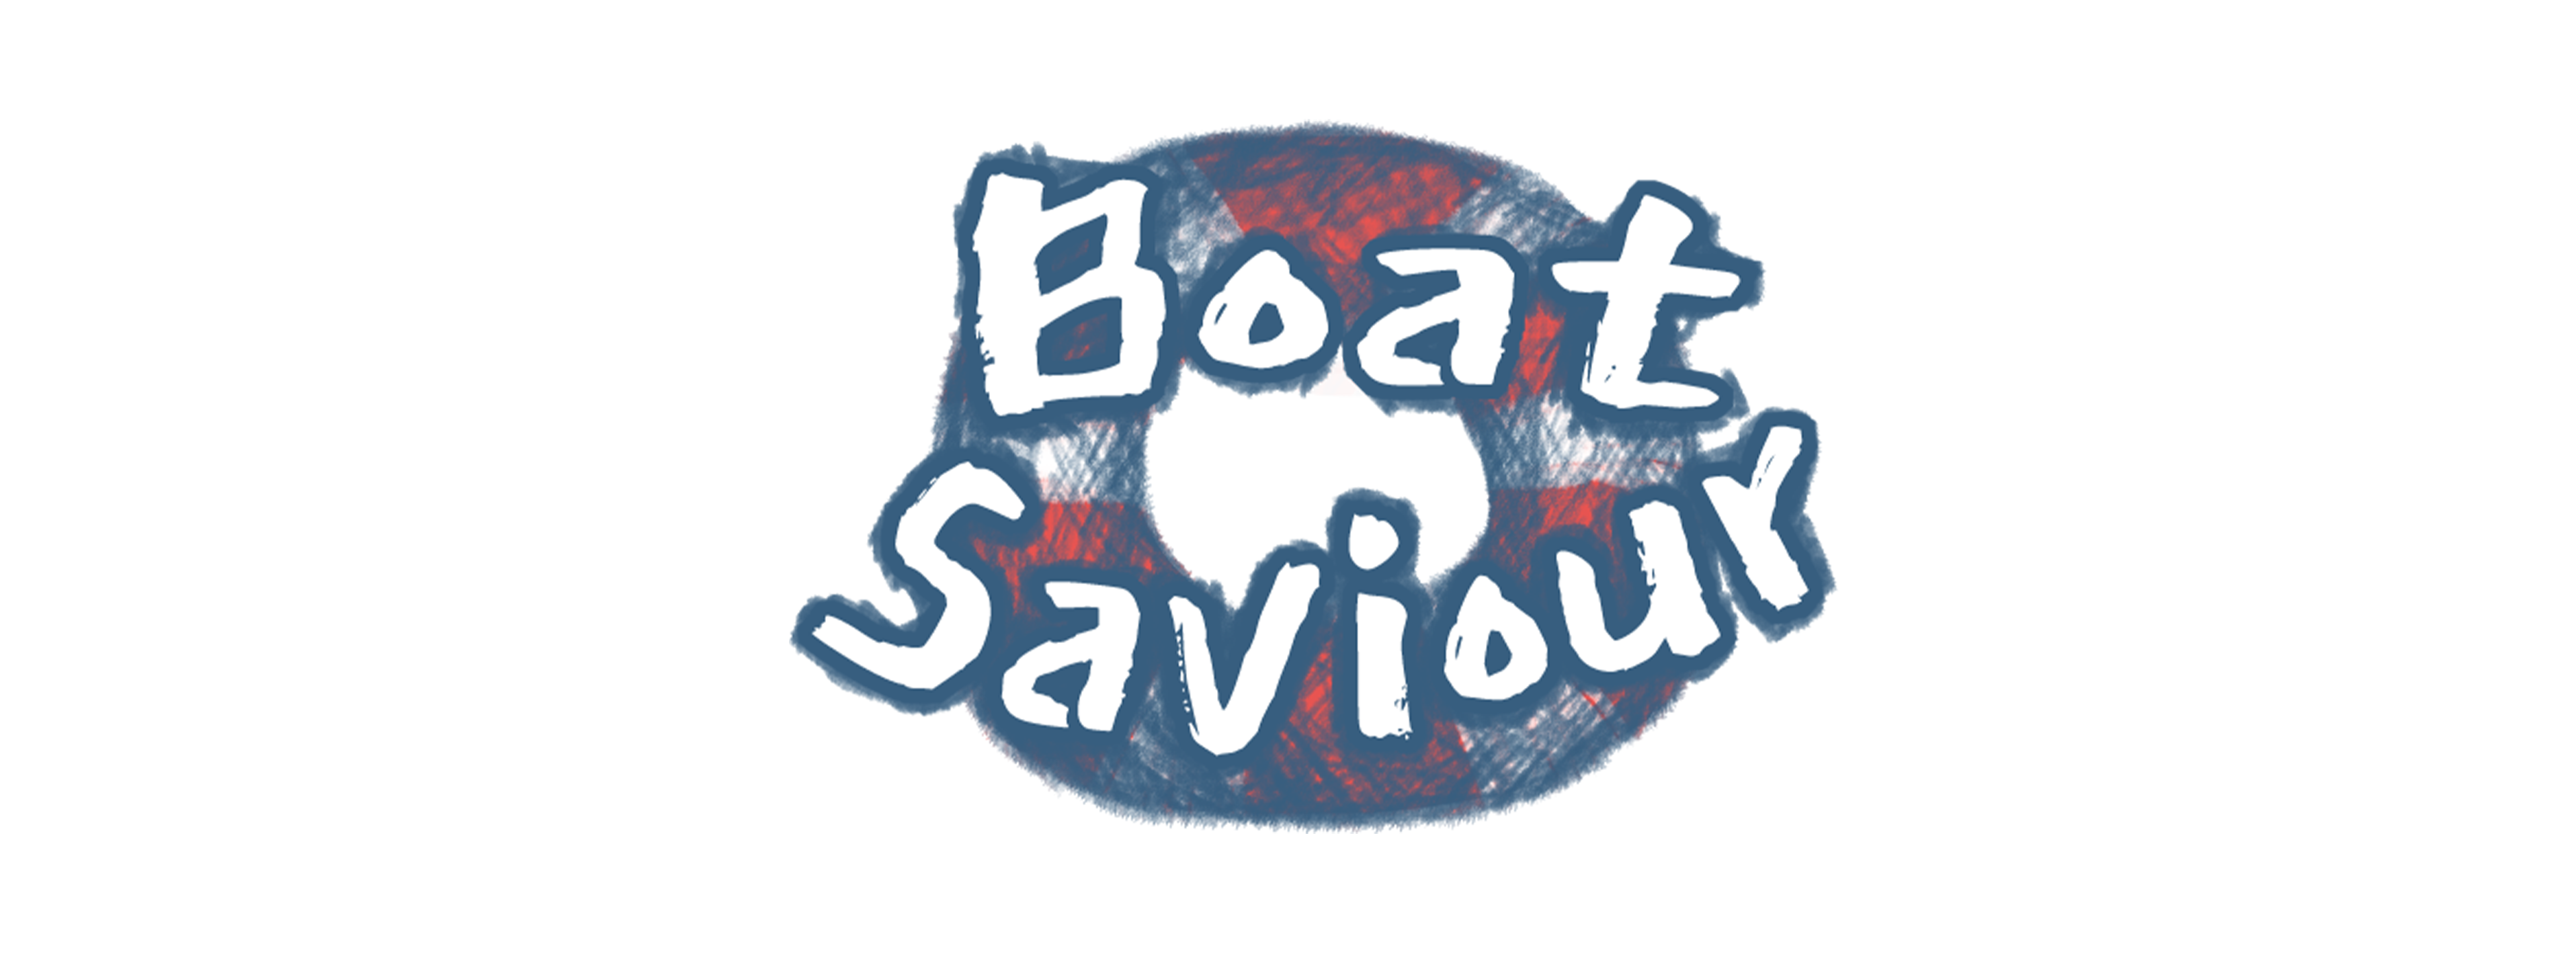 Boat Saviour